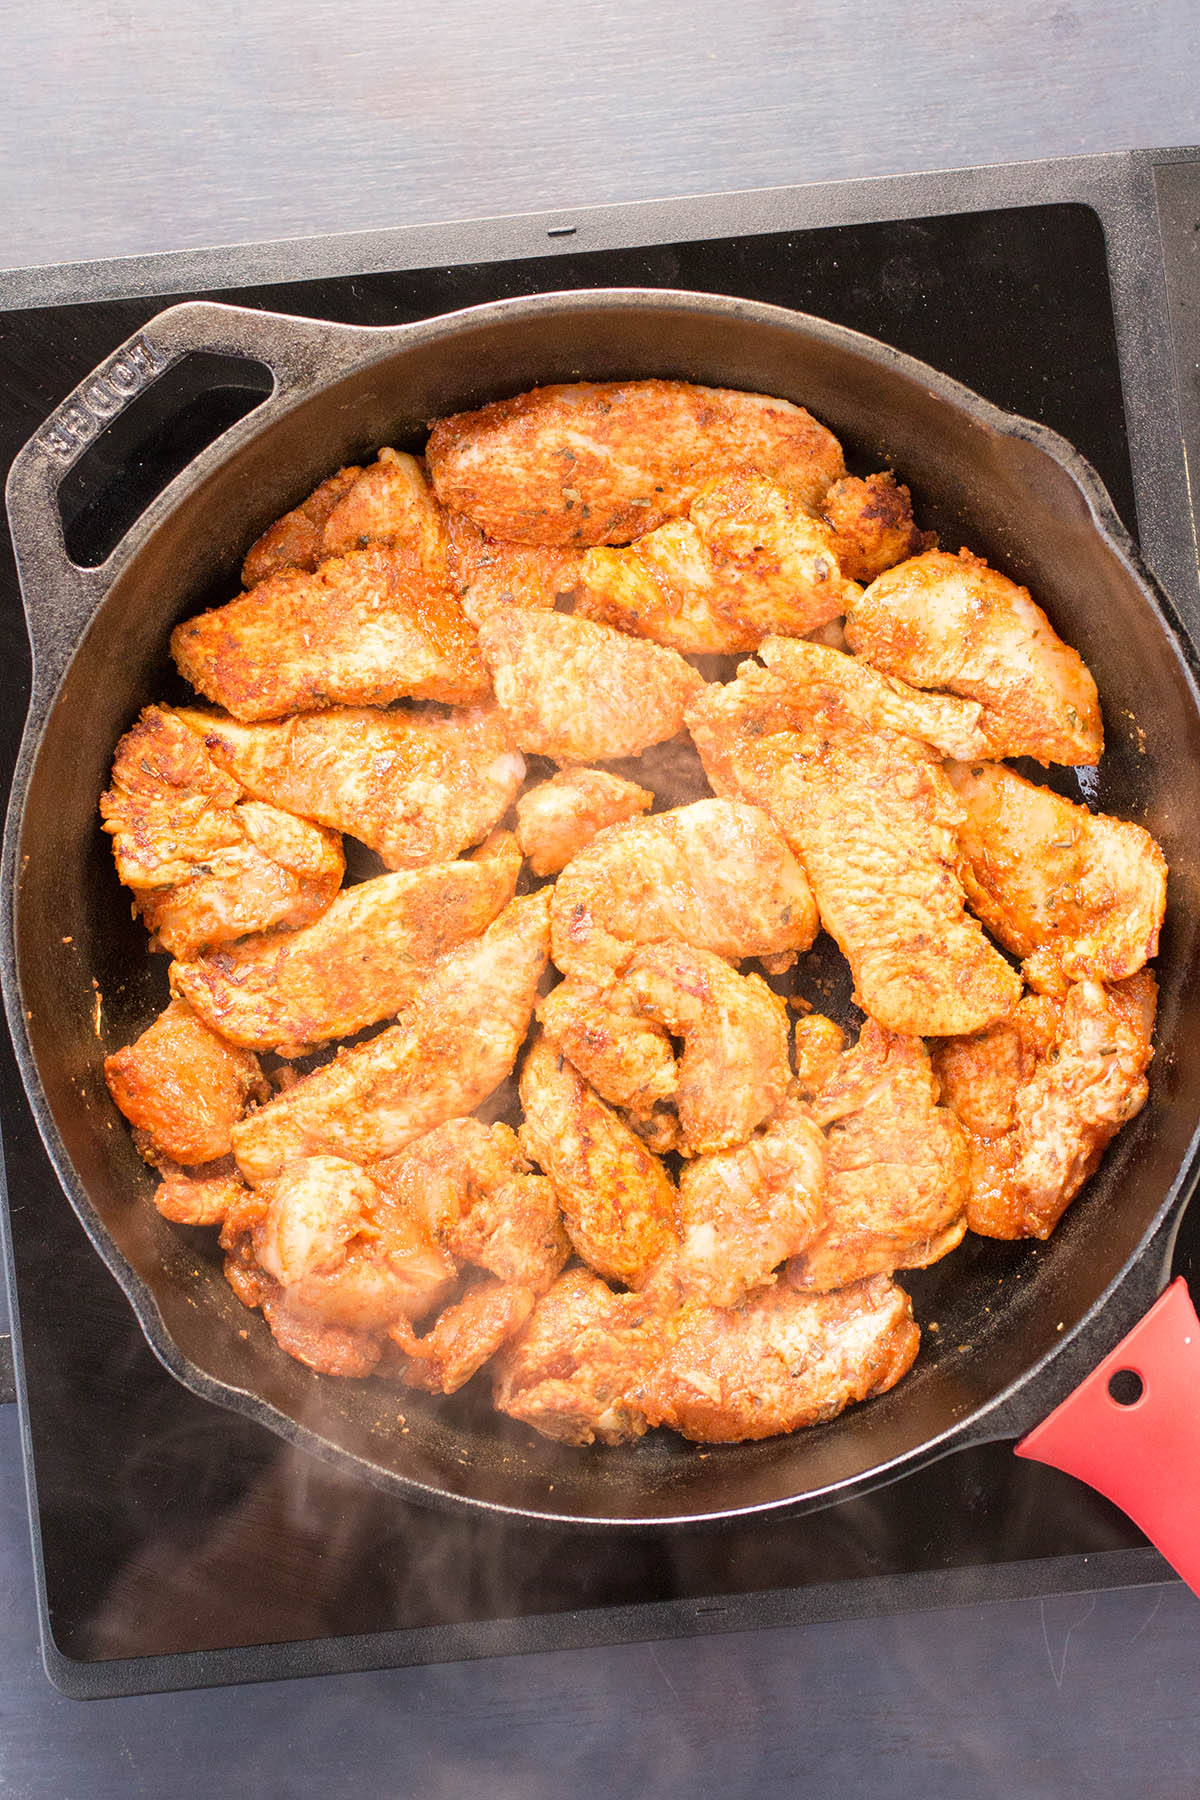 Searing sliced chicken breast in oil.